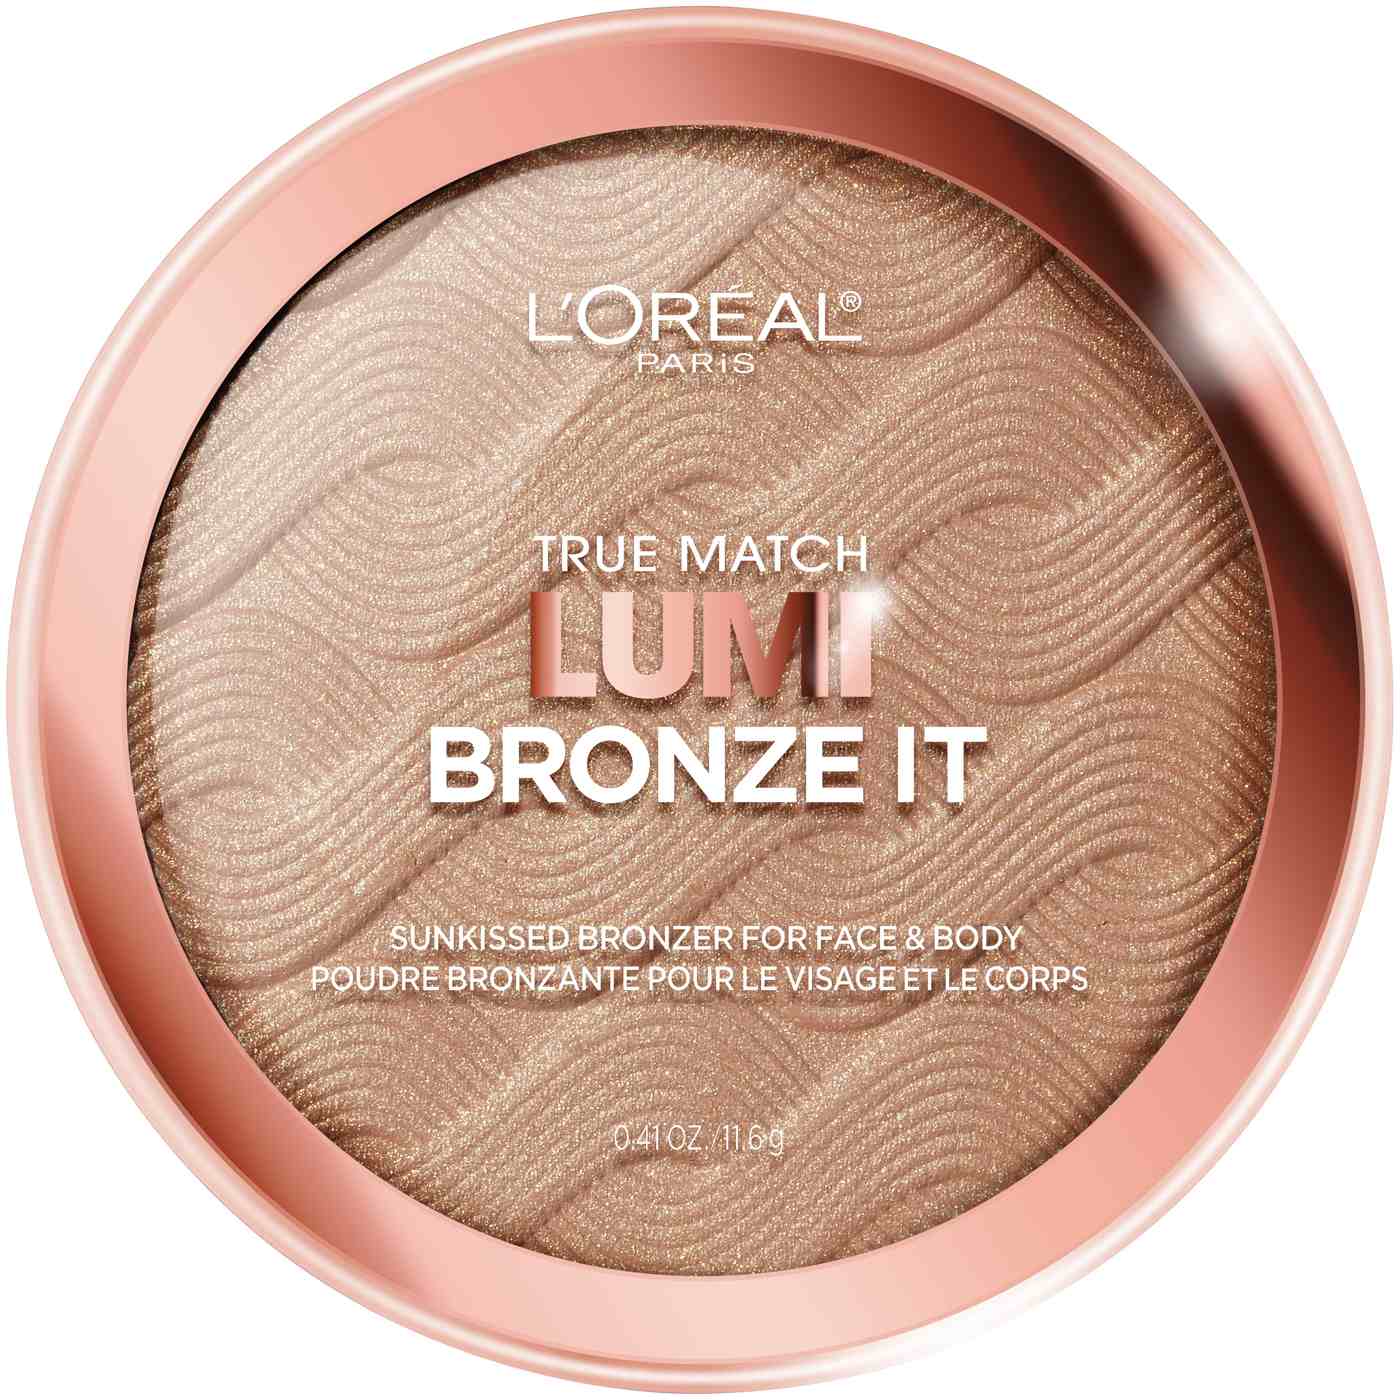 L'Oréal Paris True Match Lumi Bronze It Bronzer For Face and Body Light; image 1 of 3